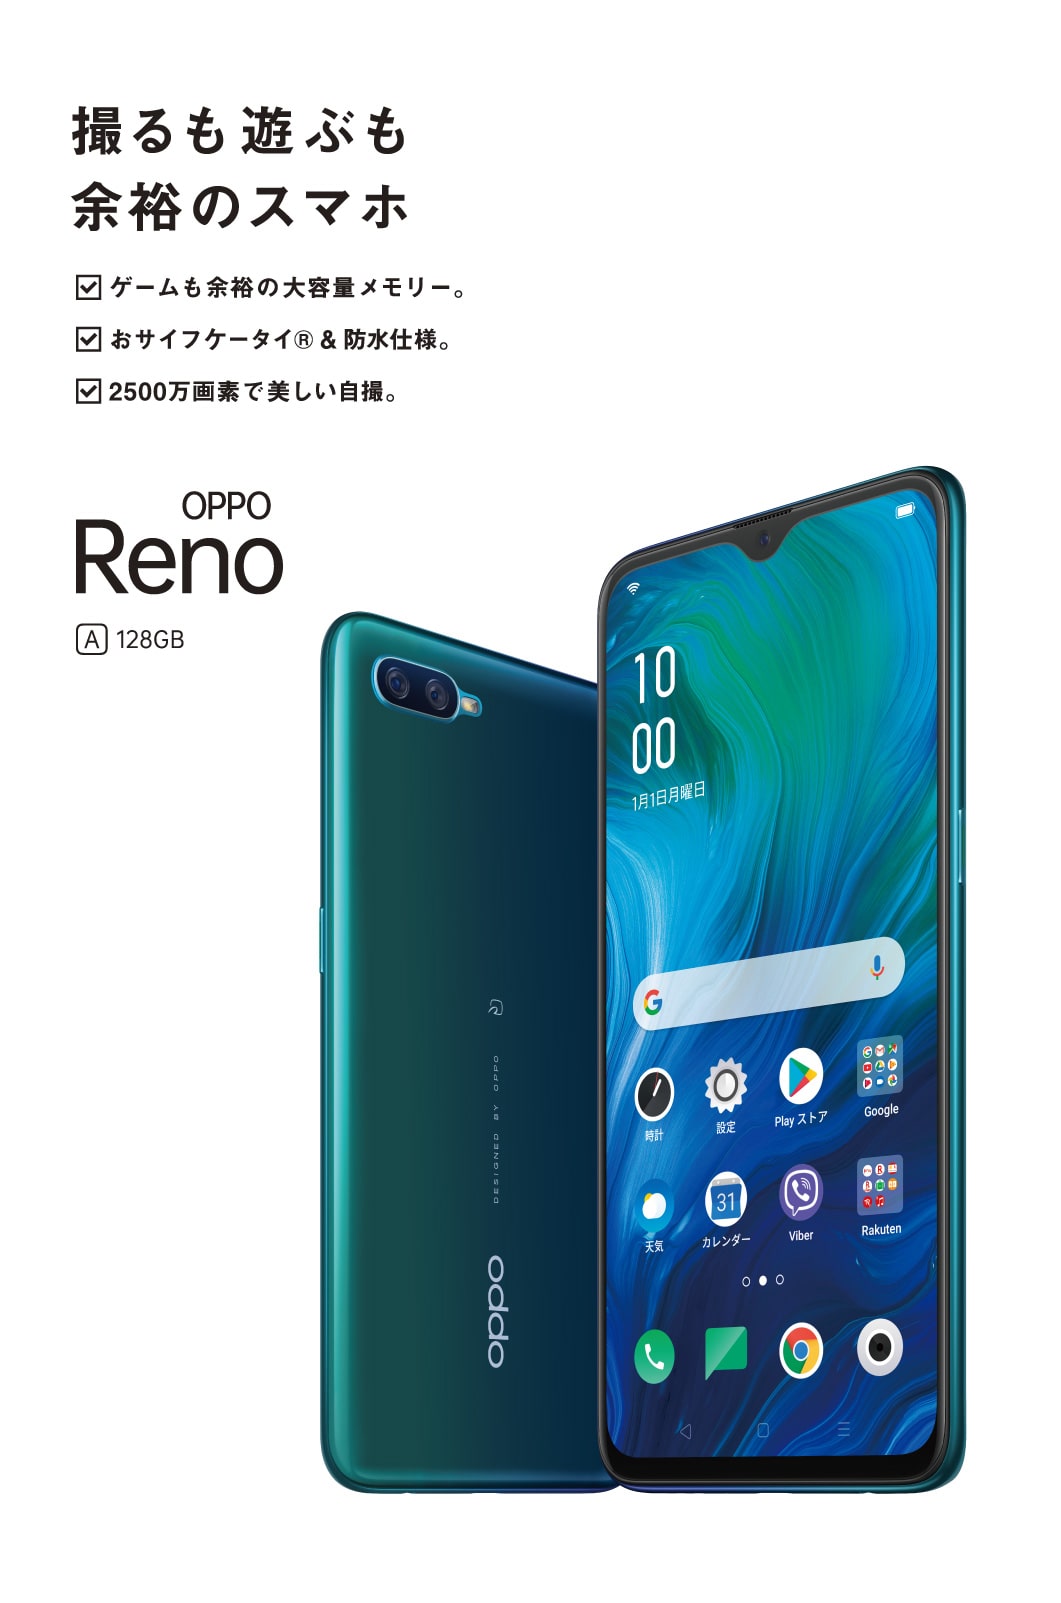 OPPO Reno A 128GB - Rakuten Mobileから10月上旬発売予定